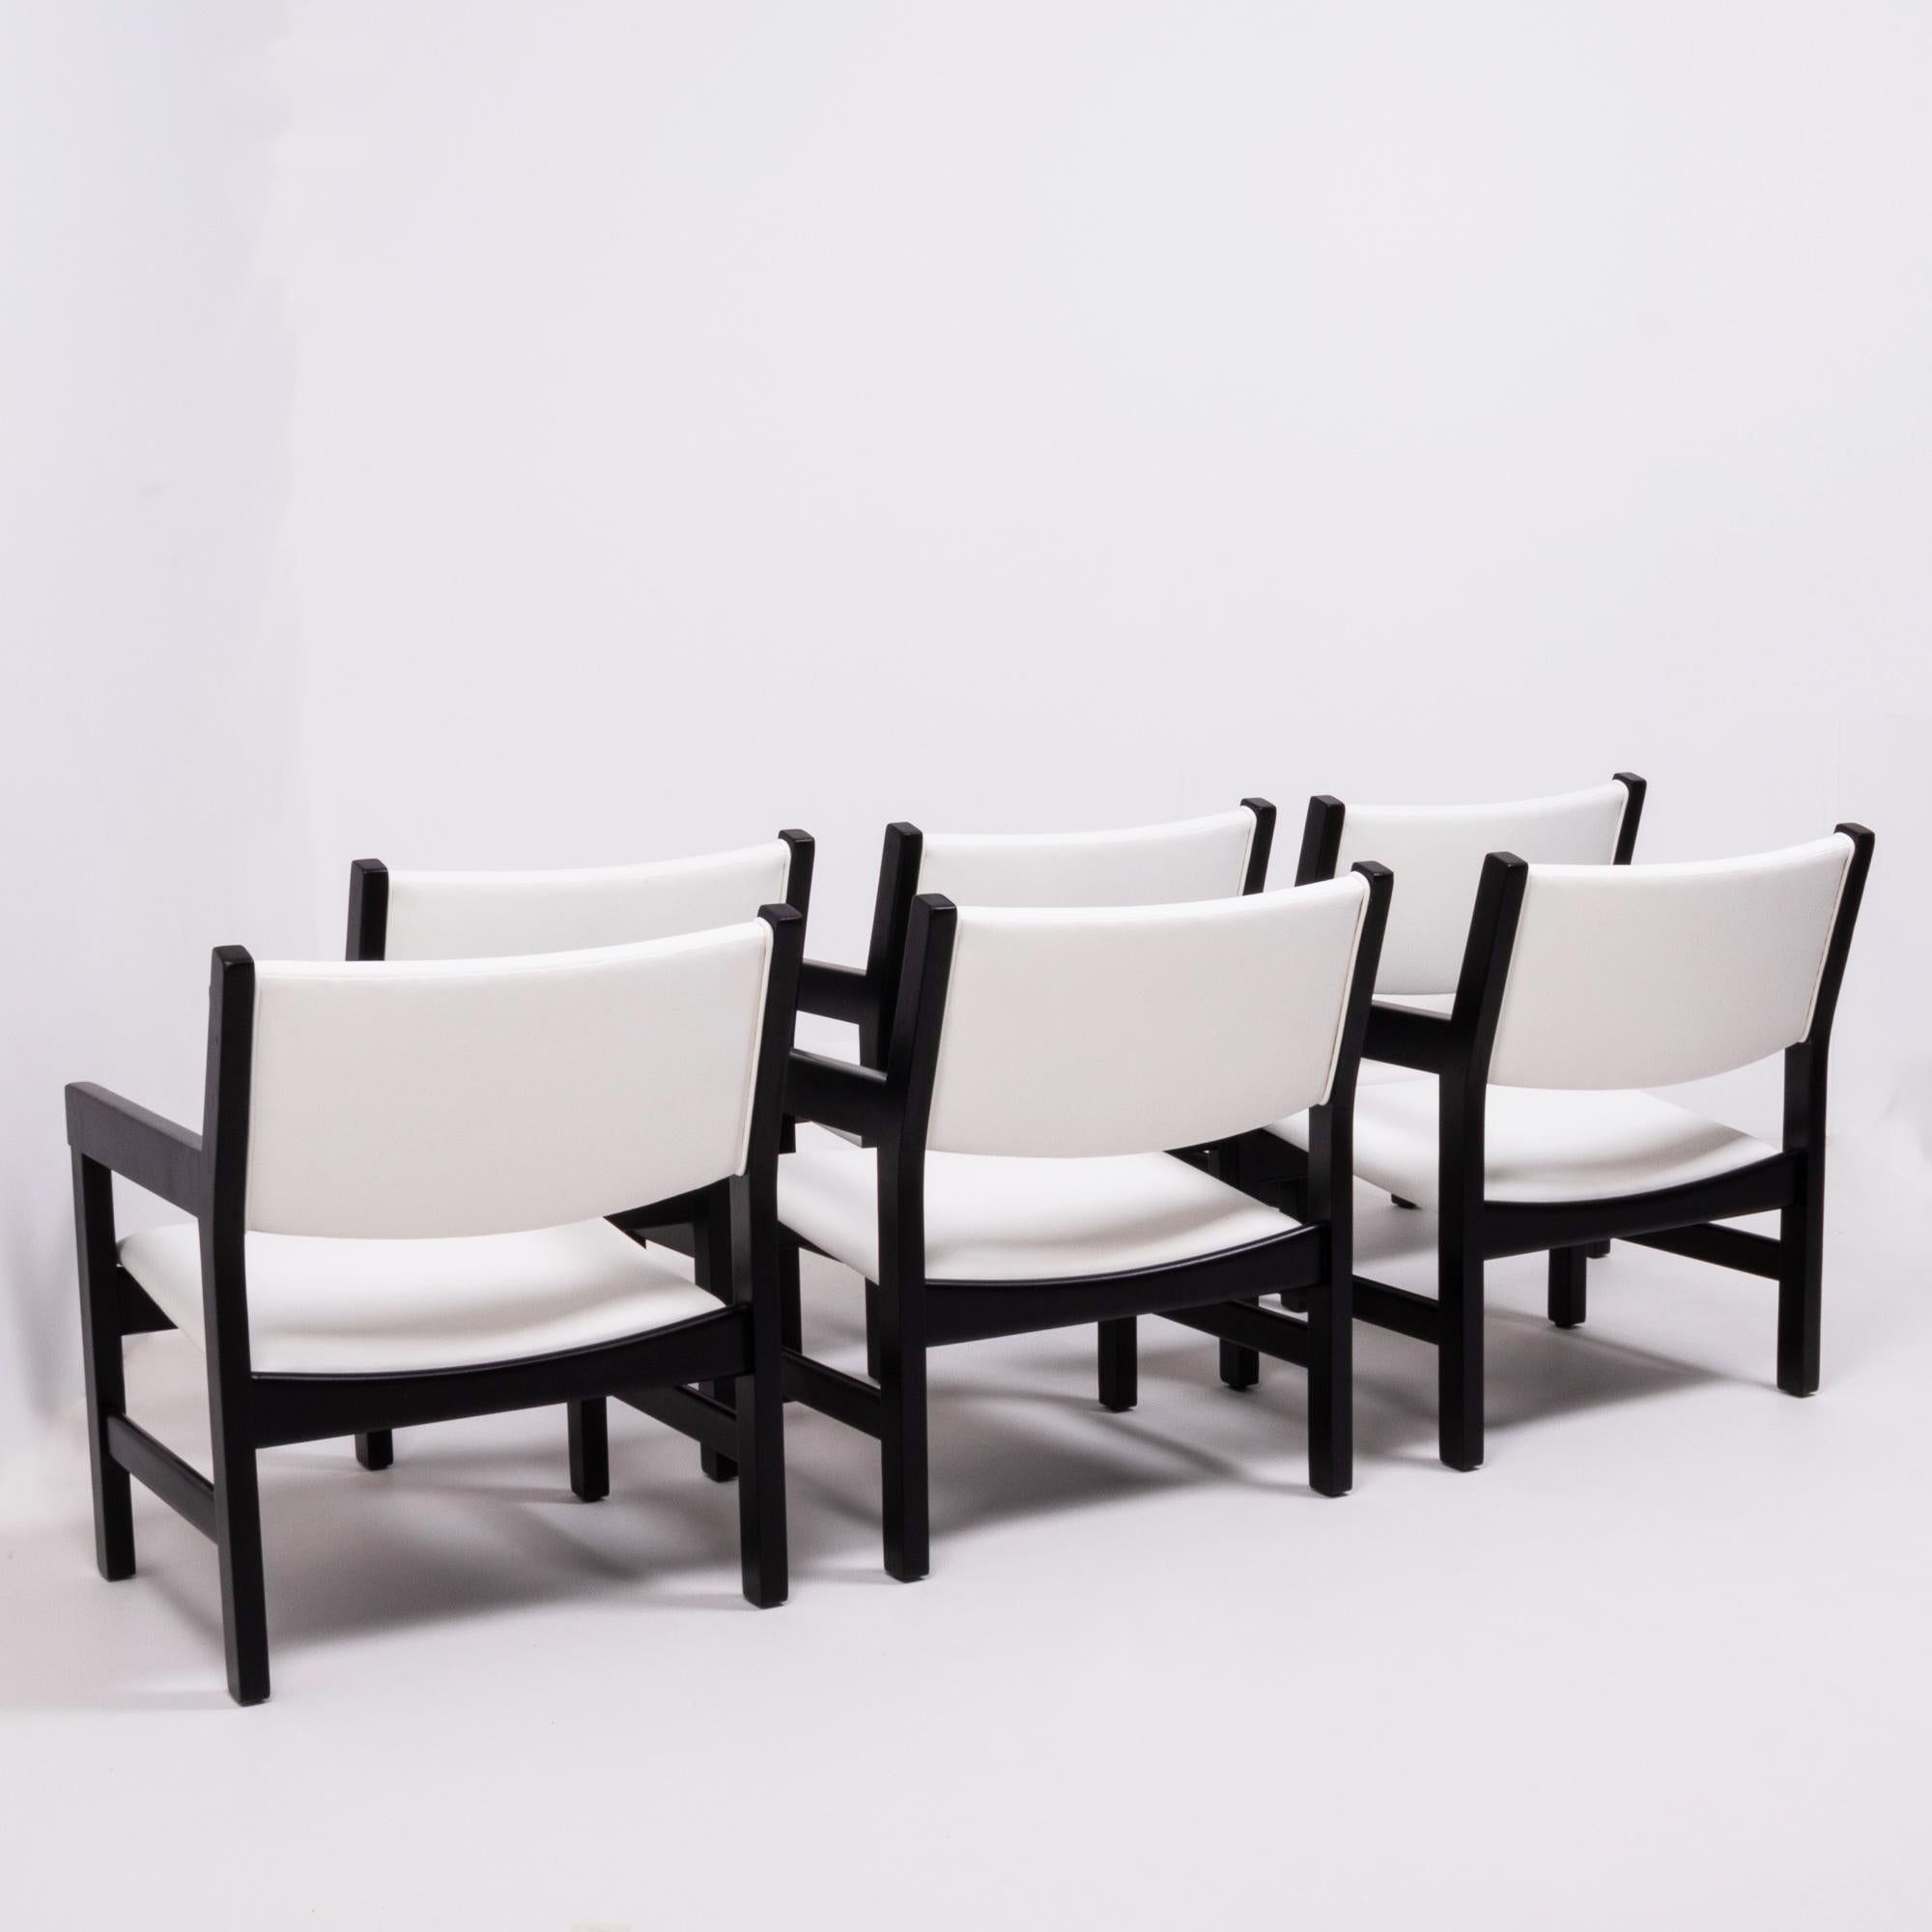 Danish Hans Wegner Midcentury Dining Chairs for GETAMA in White, Set of 6